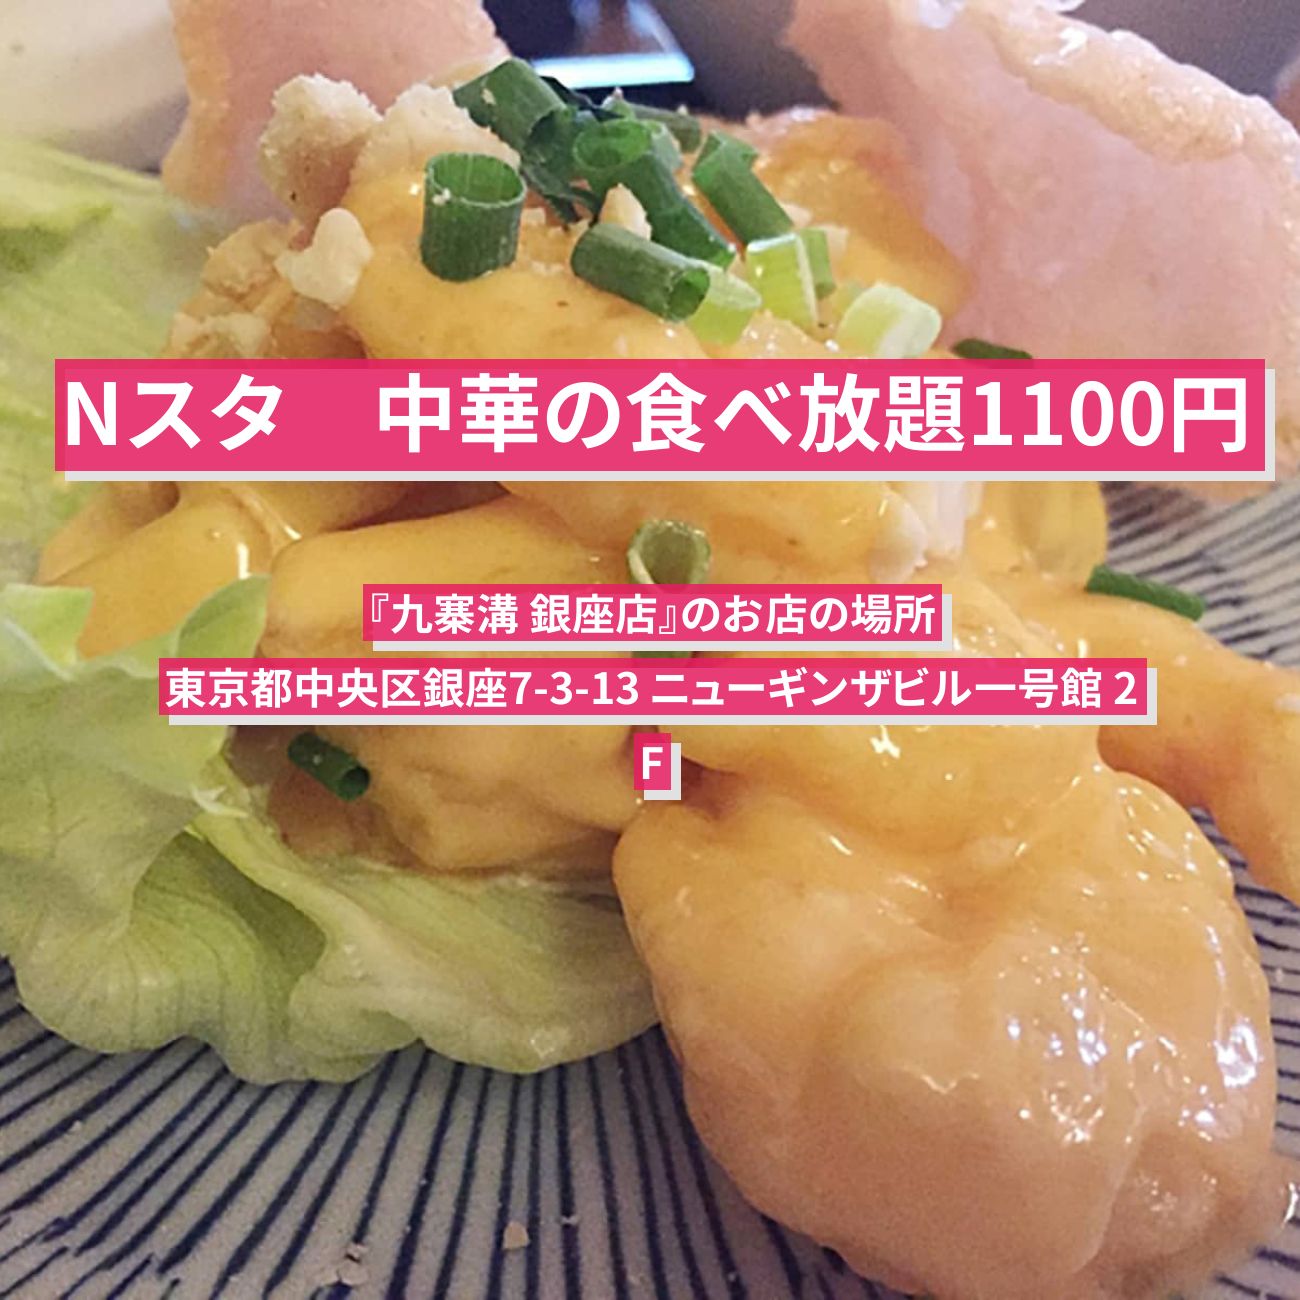 【Nスタ】中華の食べ放題が1100円『九寨溝 銀座店』のお店の場所